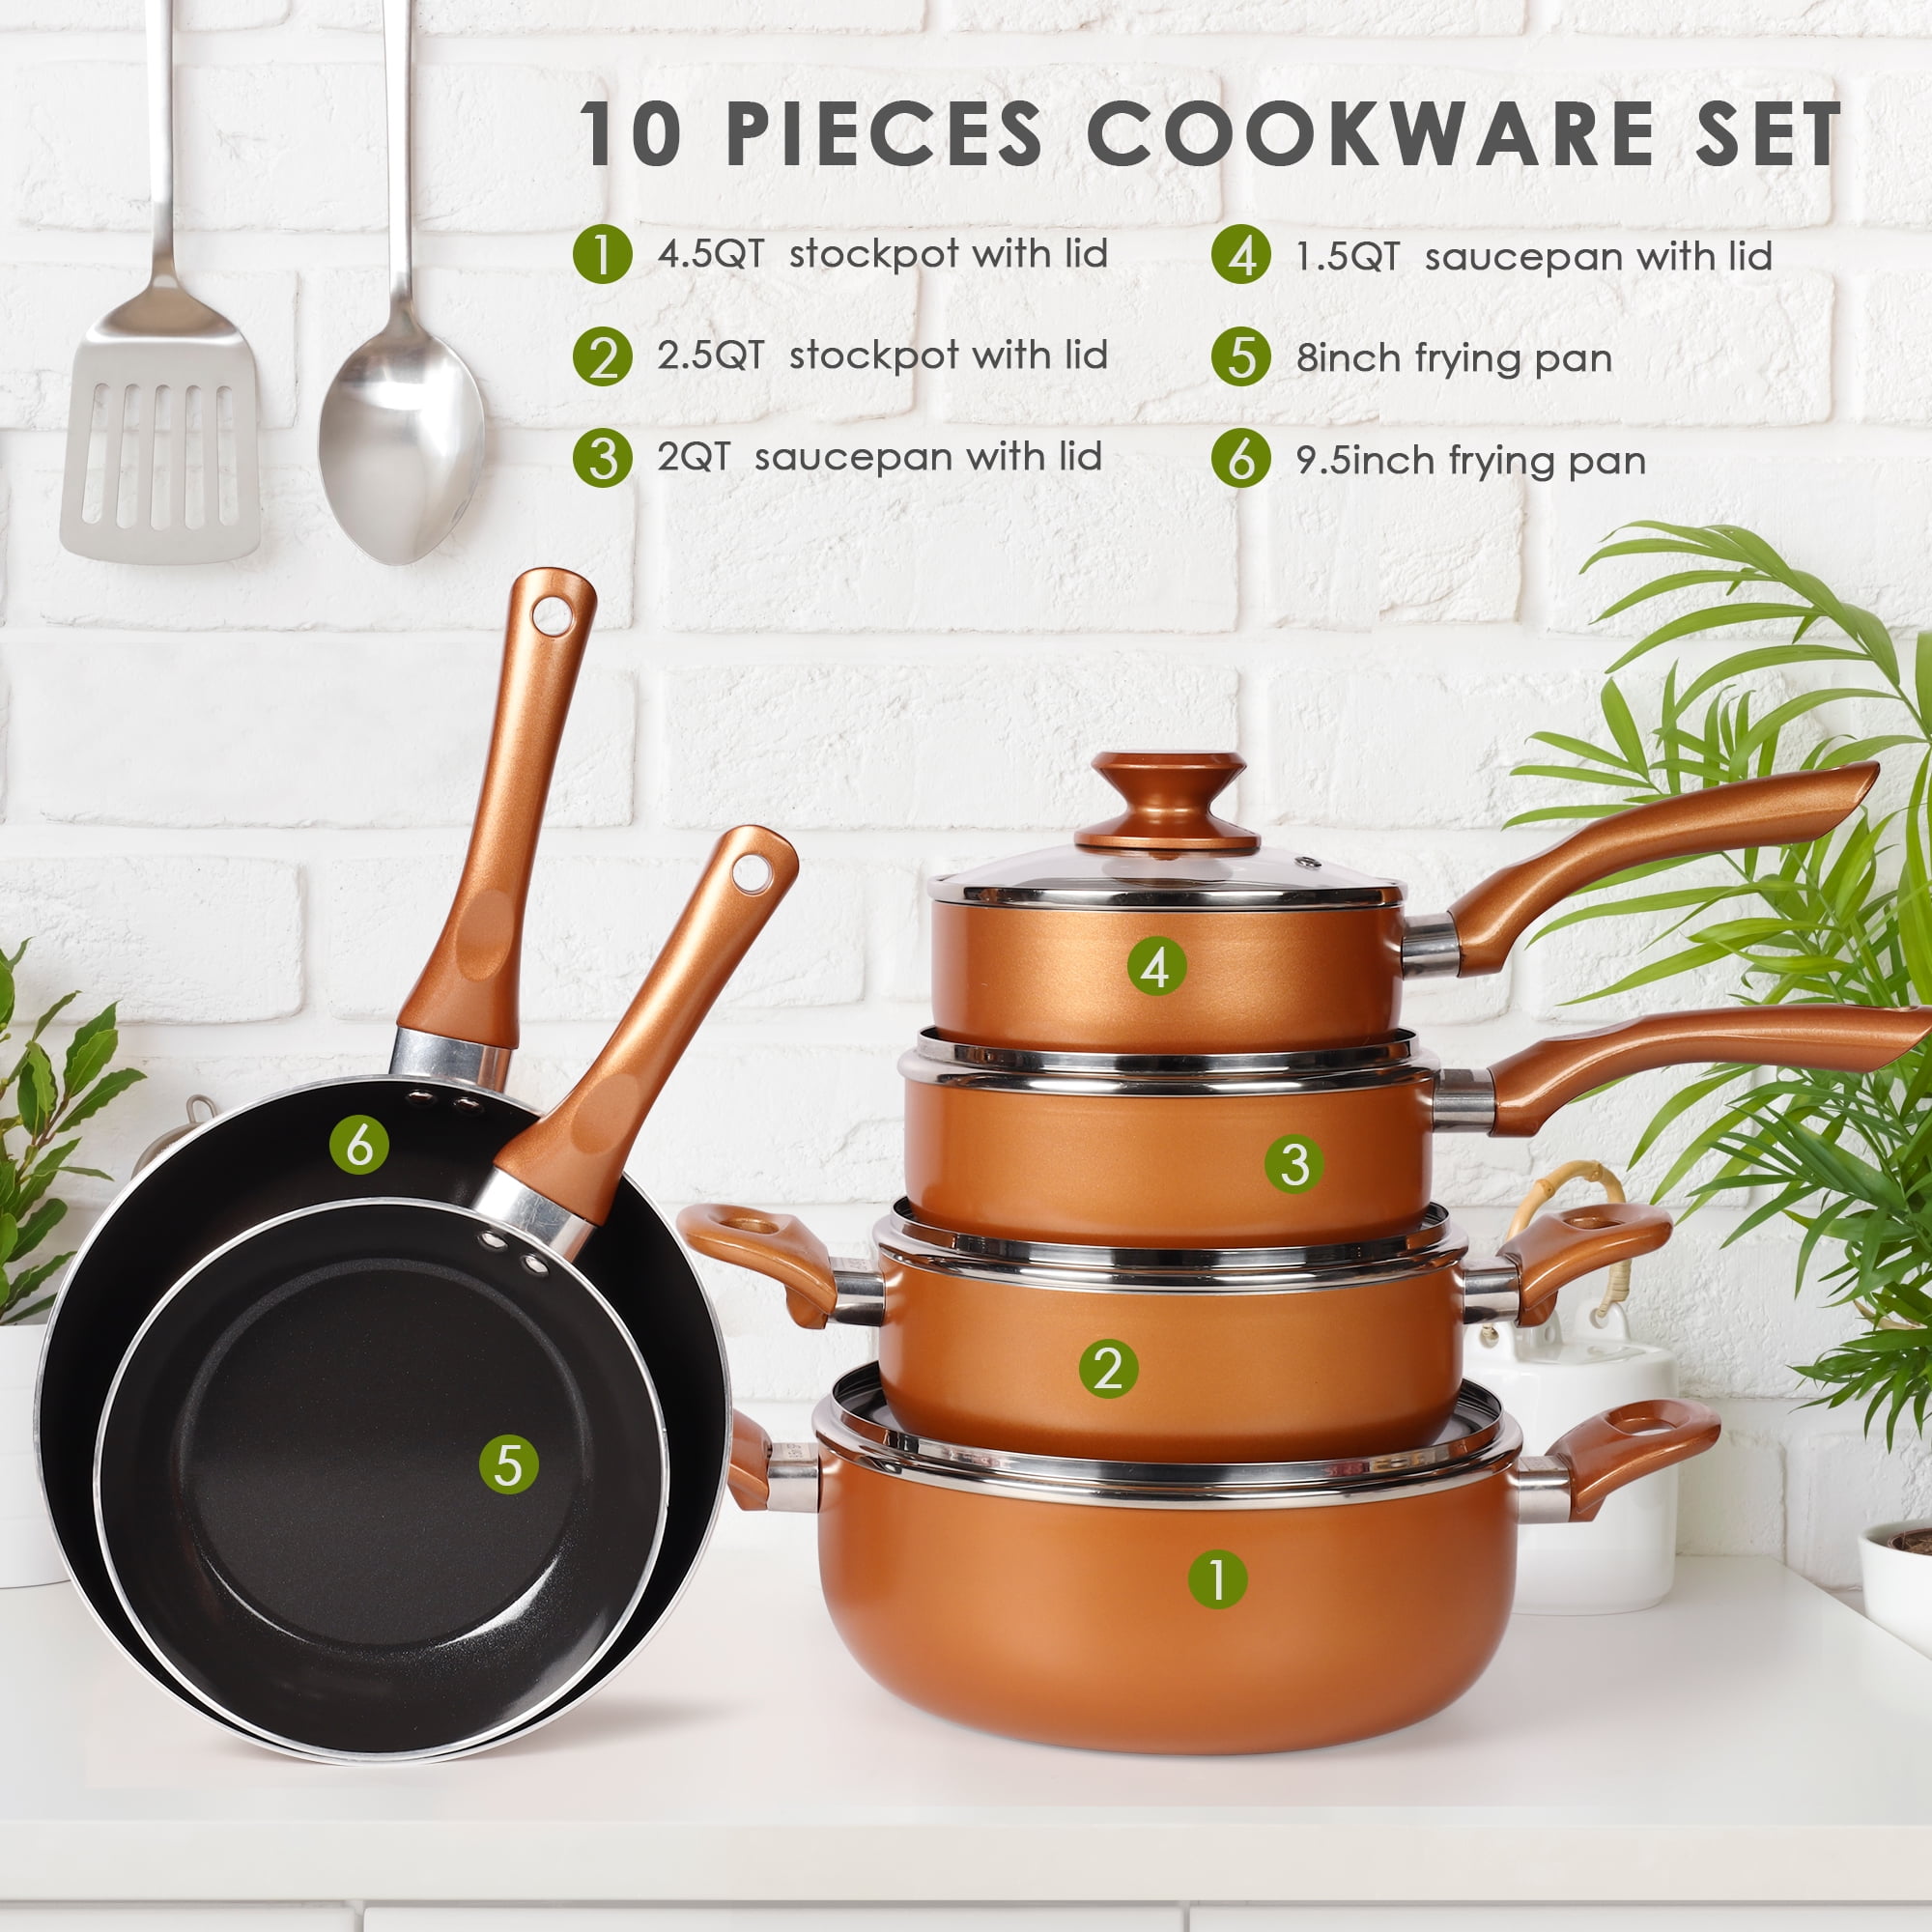 Scafild  6-Piece Aluminum Non-Stick Ceramic Cookware Set - Copper 